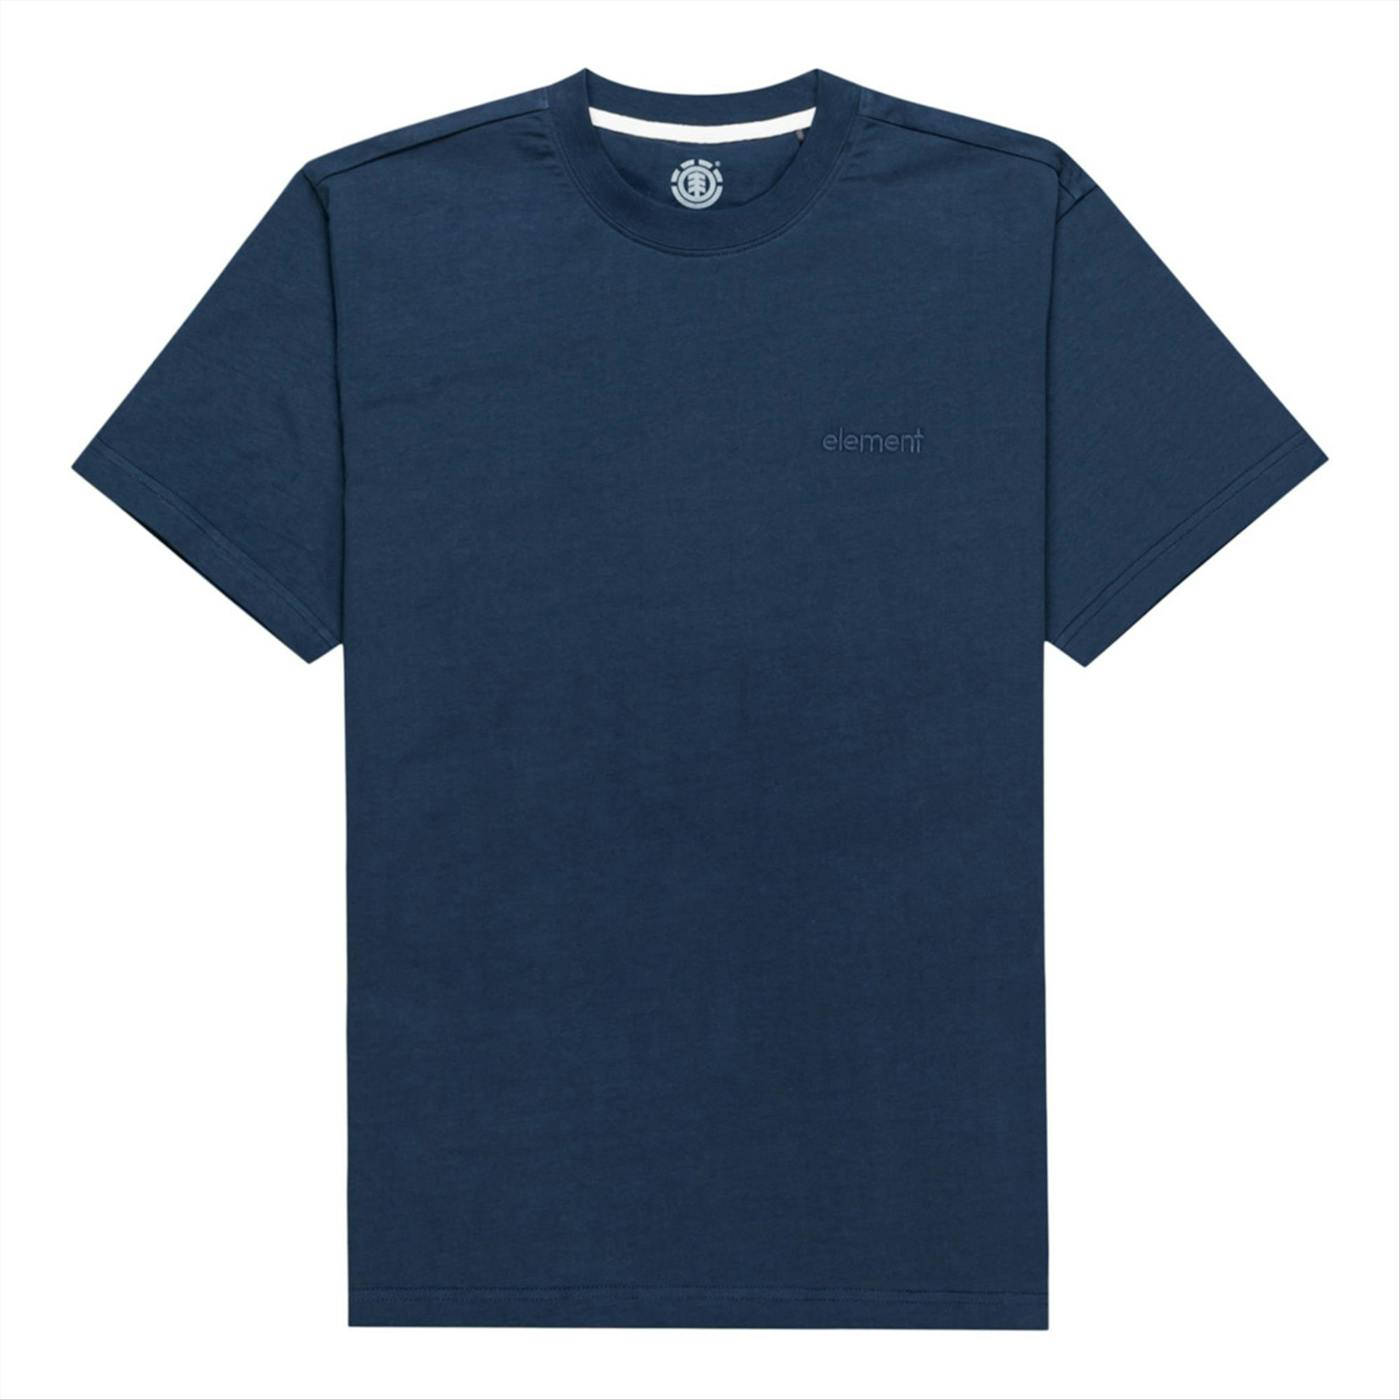 Element - Donkerblauwe Crail 3.0 T-shirt